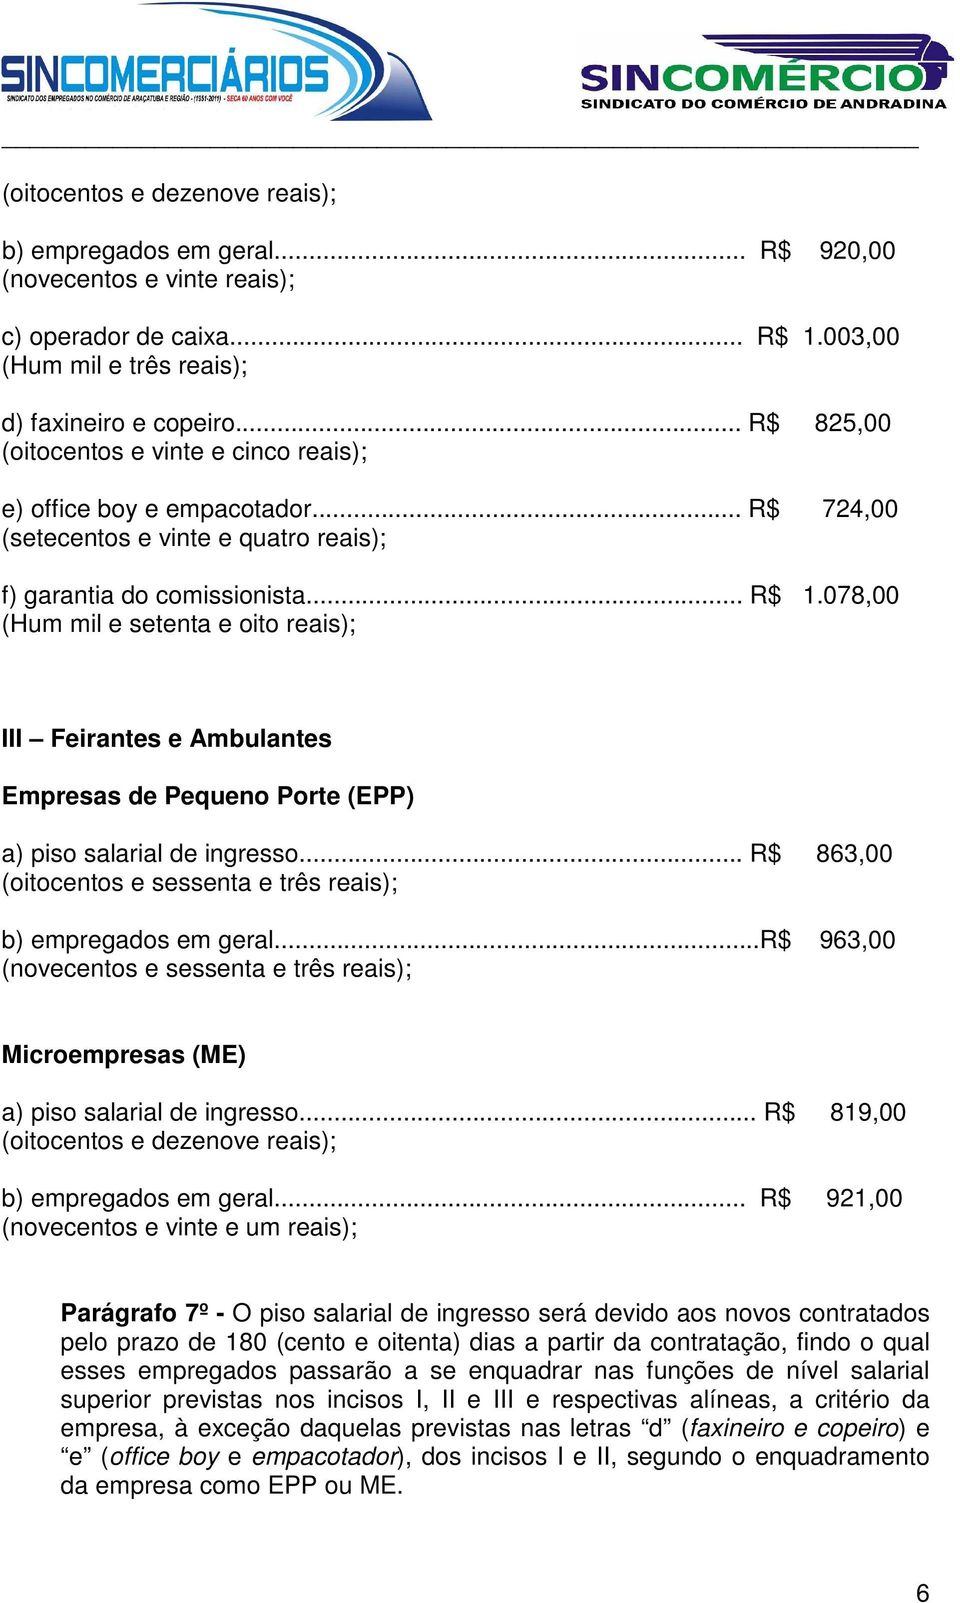 078,00 (Hum mil e setenta e oito reais); III Feirantes e Ambulantes Empresas de Pequeno Porte (EPP) a) piso salarial de ingresso.